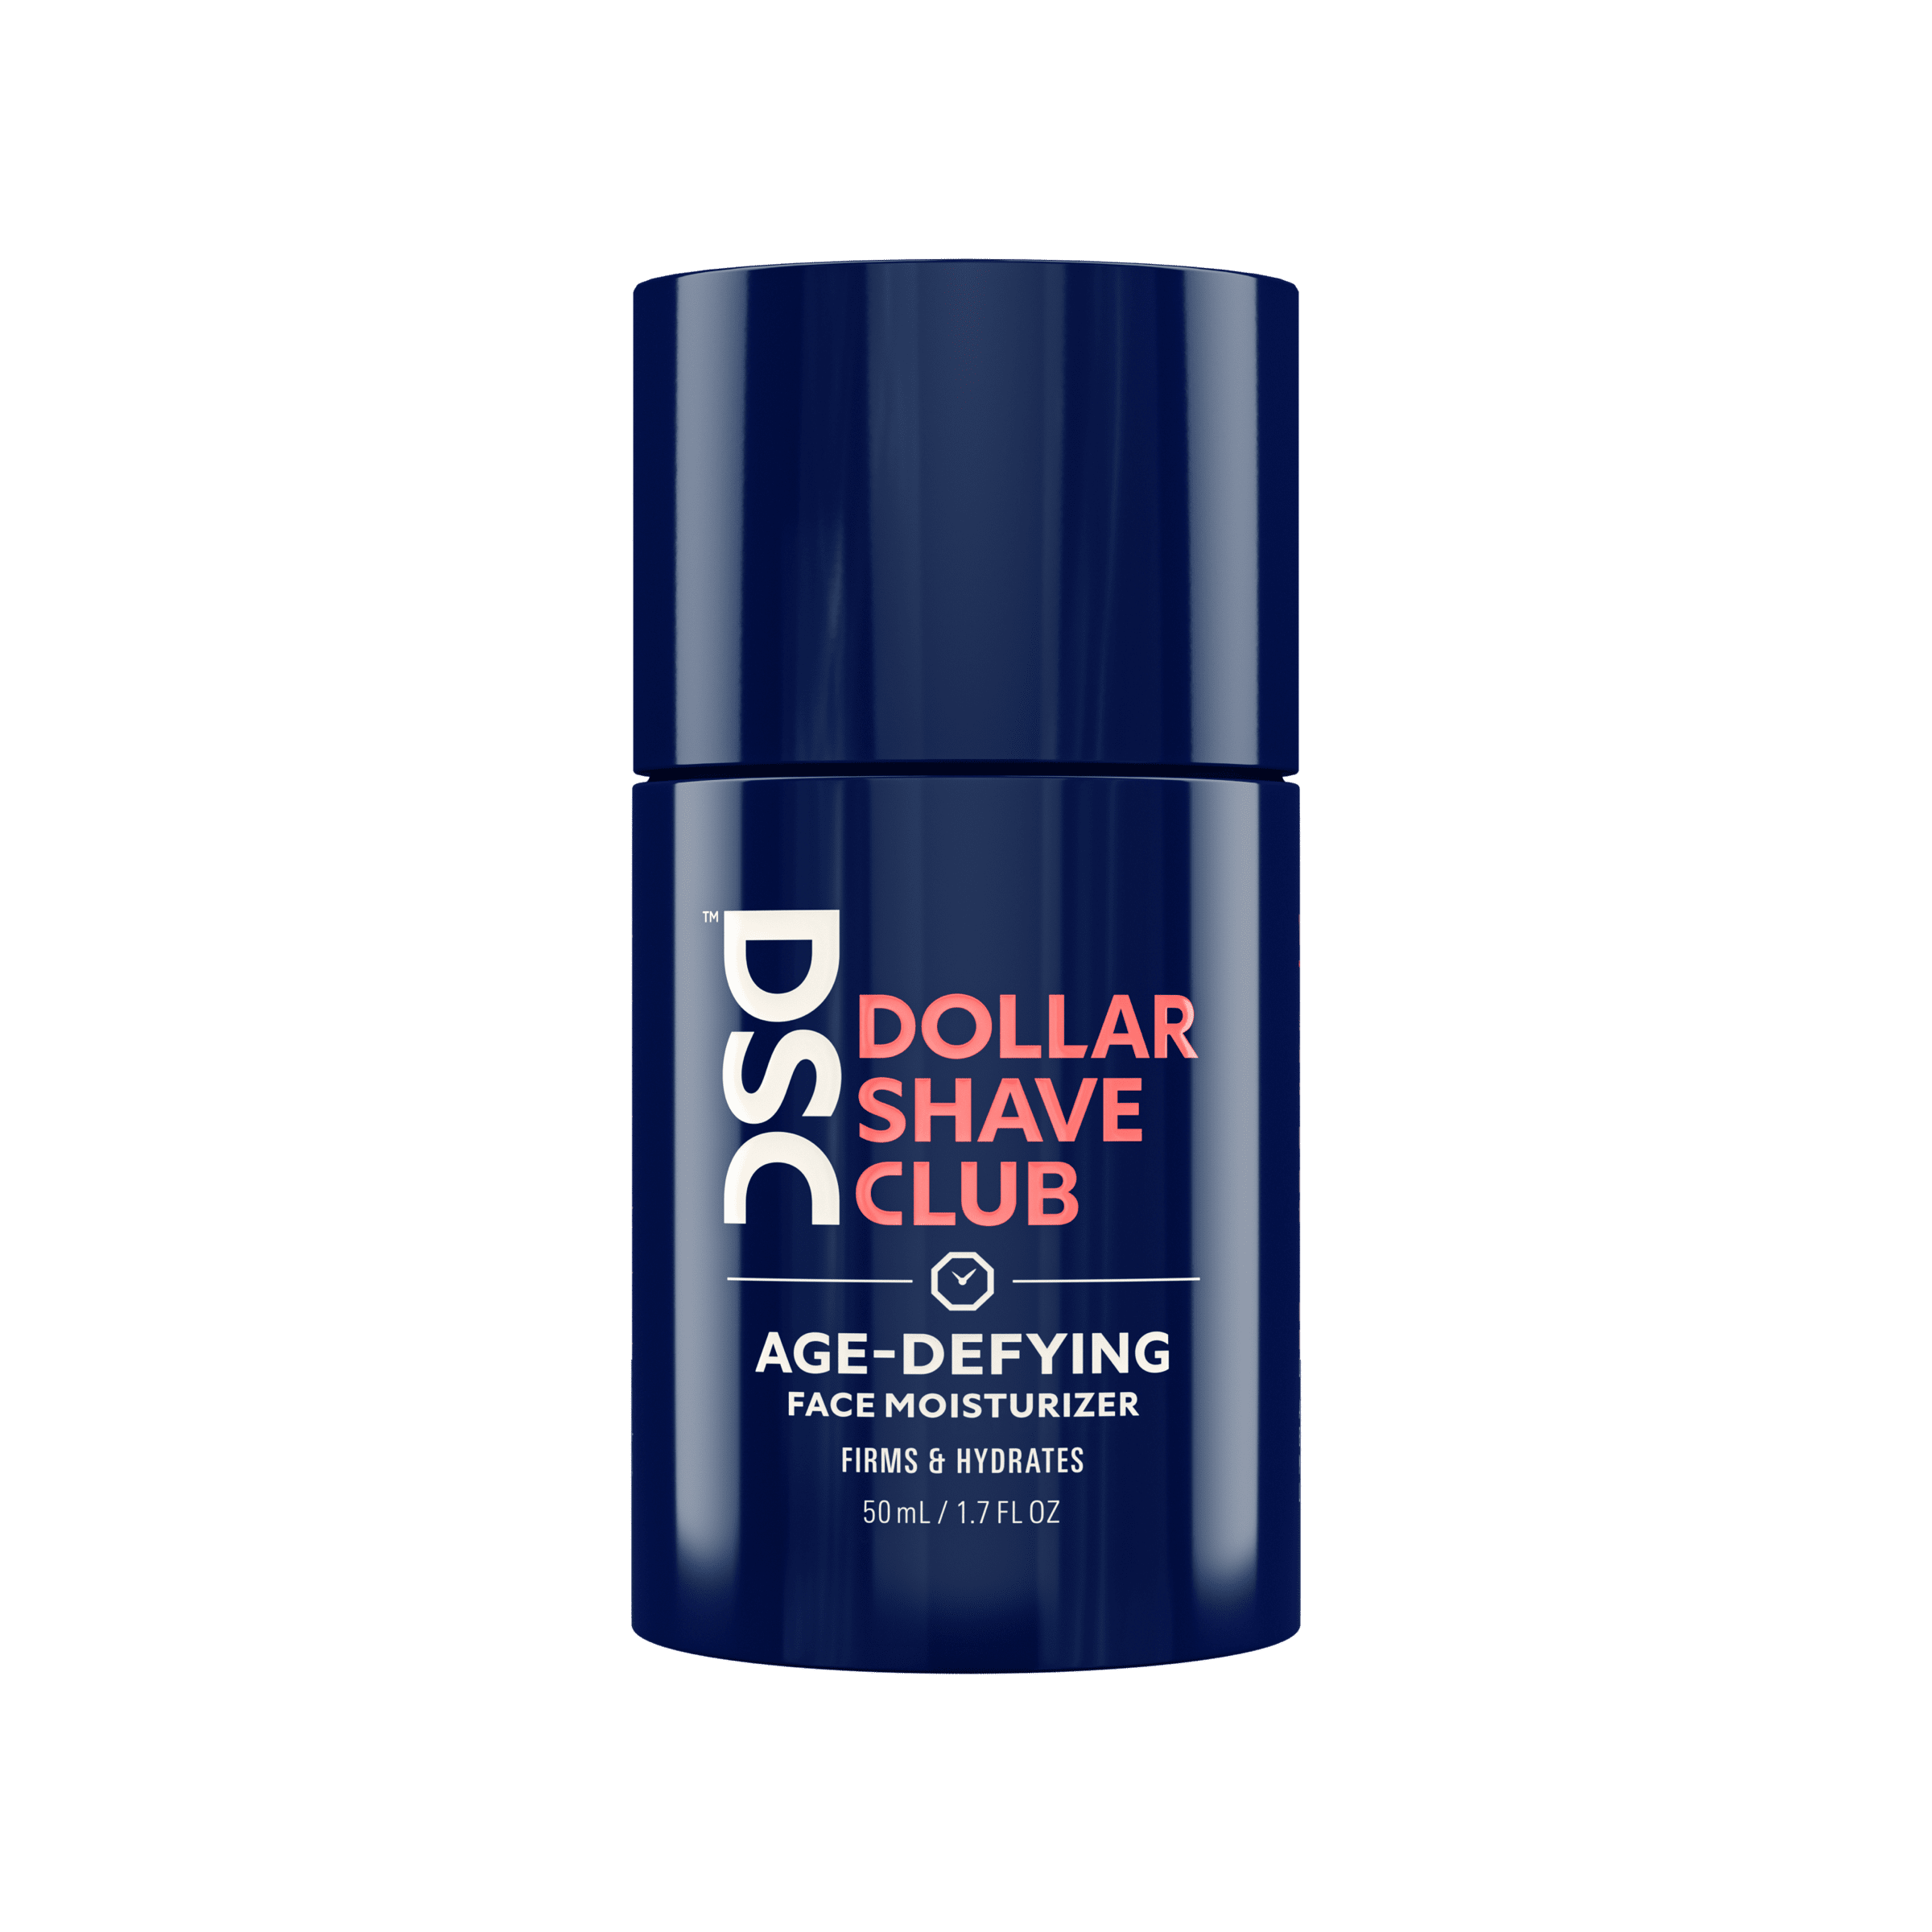 Dollar Shave Club Age Defying Face Moisturizer against blank backdrop.